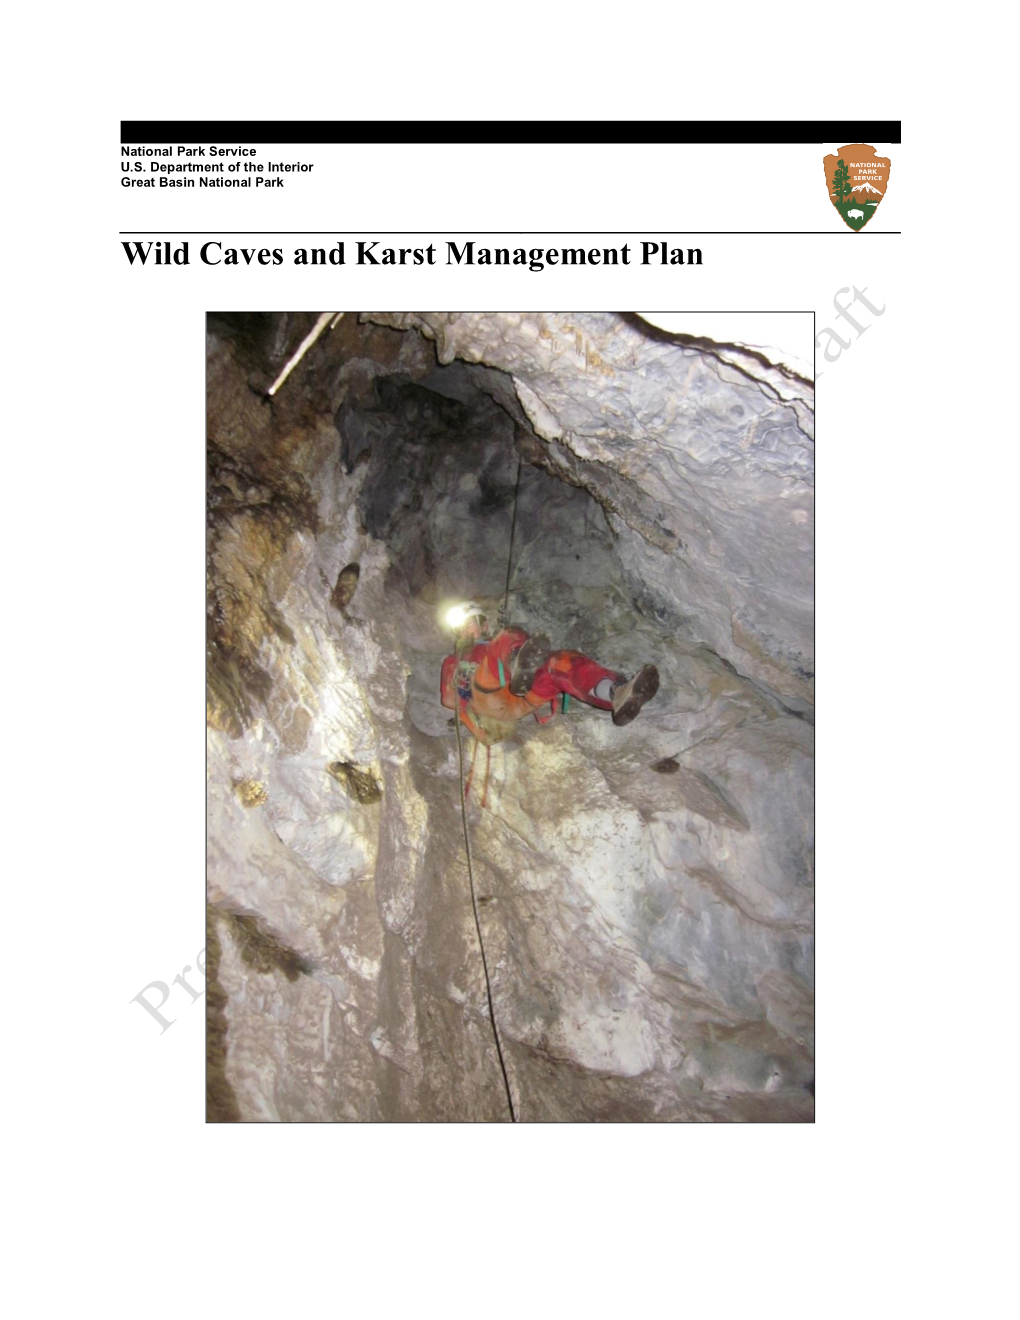 Wild Caves and Karst Management Plan, Great Basin National Park